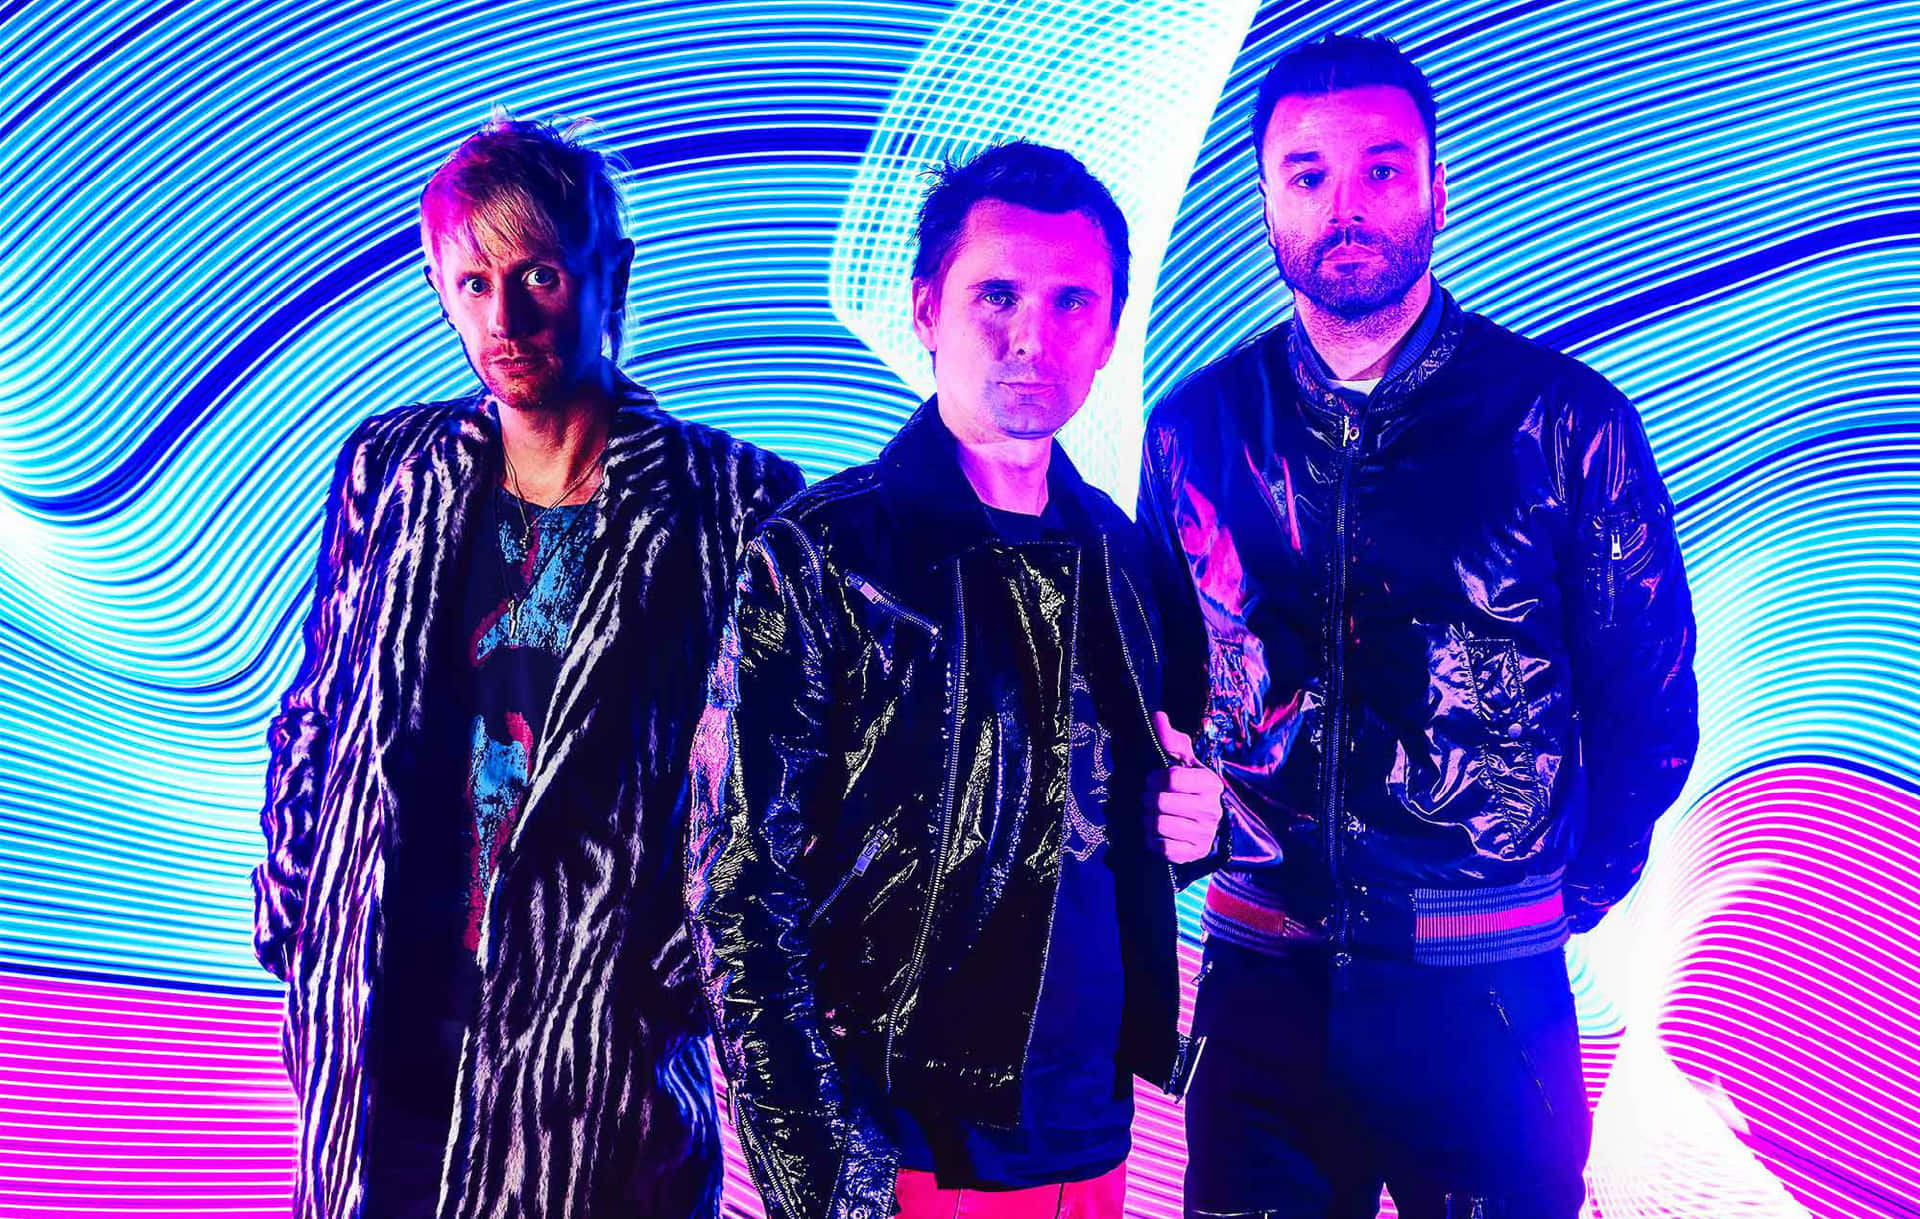 Band Members Against Neon Lights Wallpaper